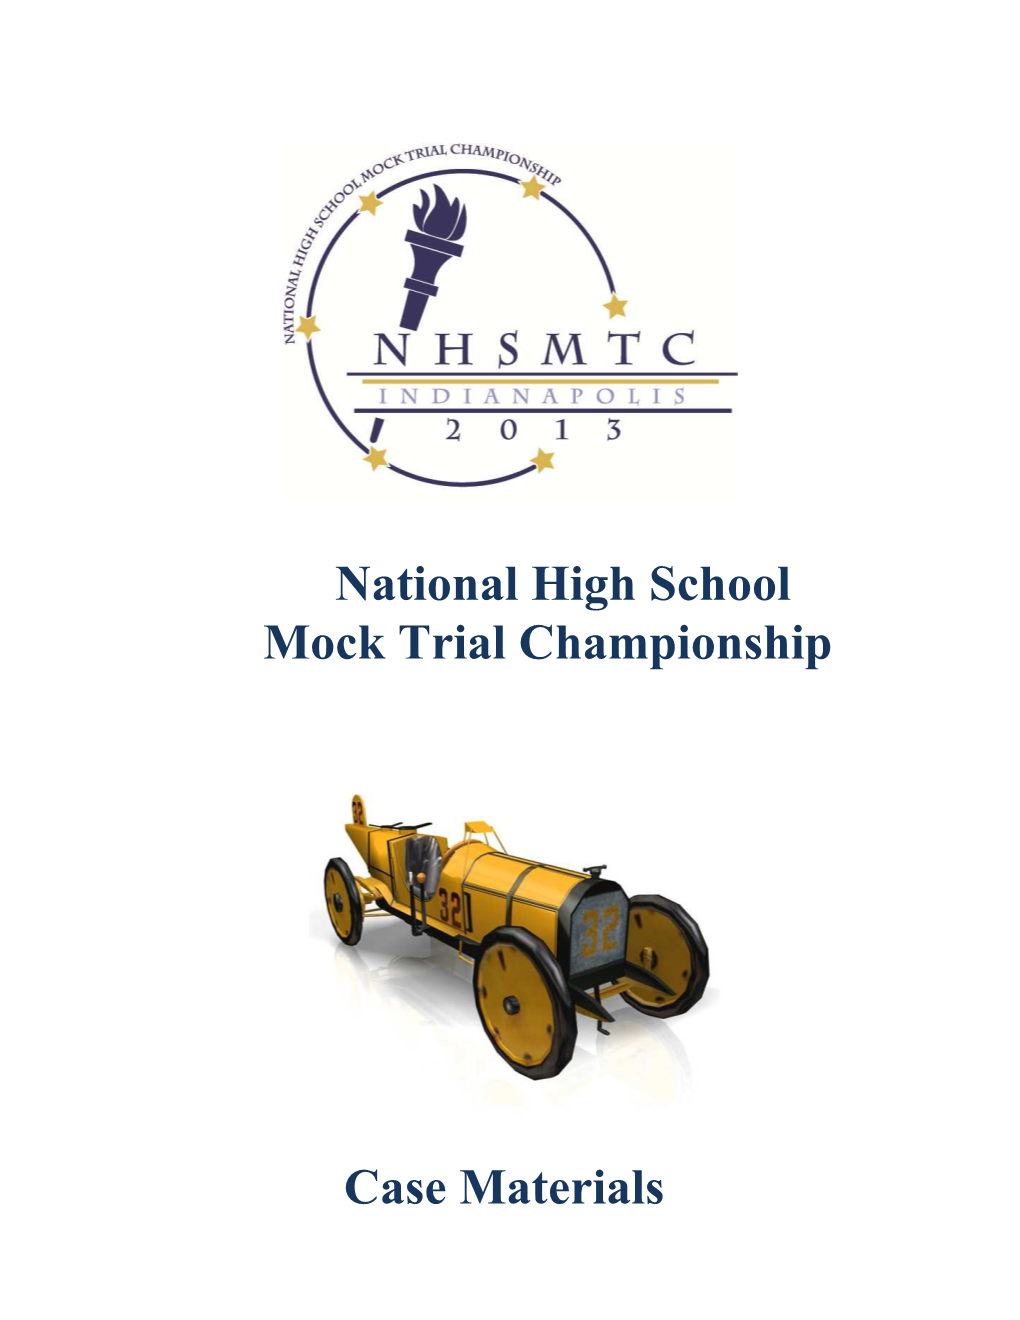 National High School Mock Trial Championship Case Materials